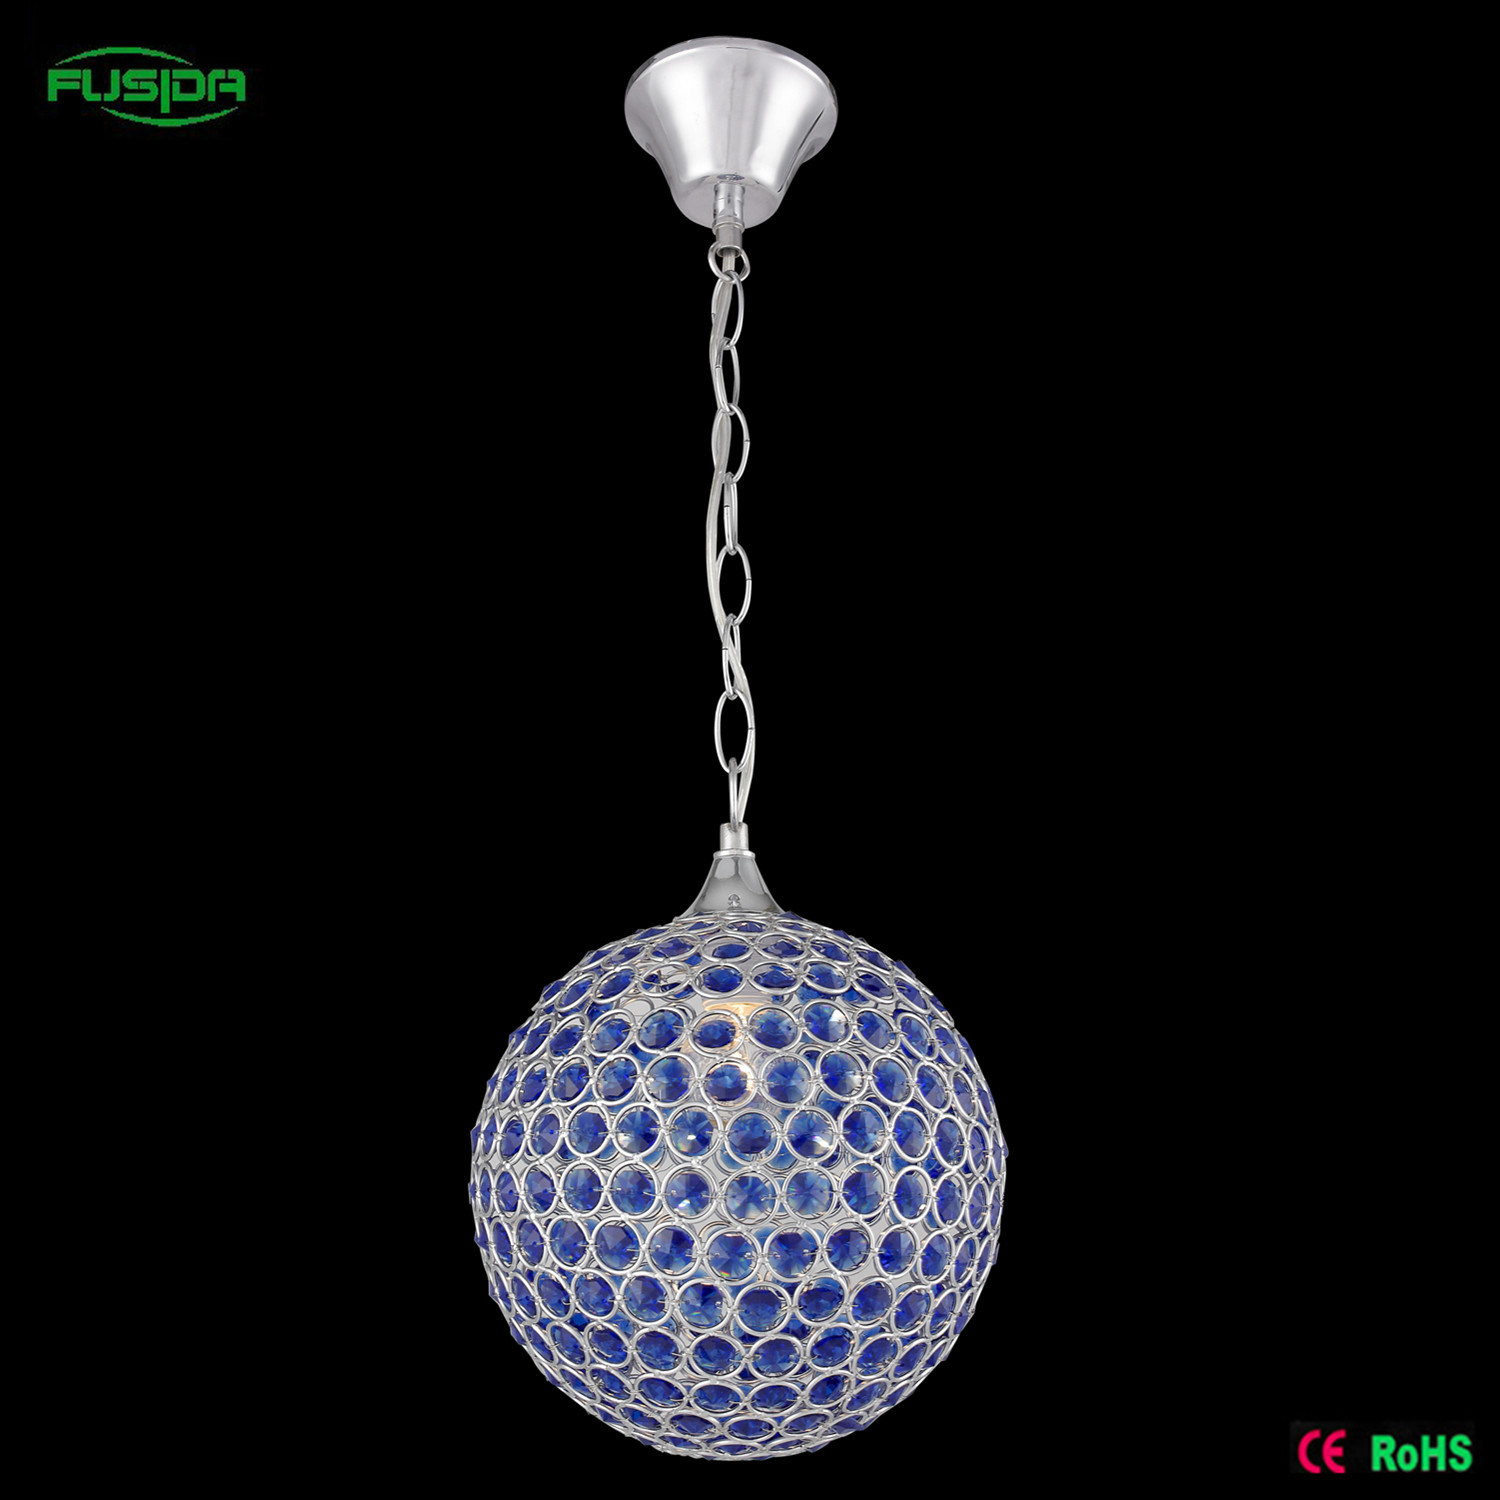 Crystal Lamp Round Ball Crystal Chandelier, Pendant Light